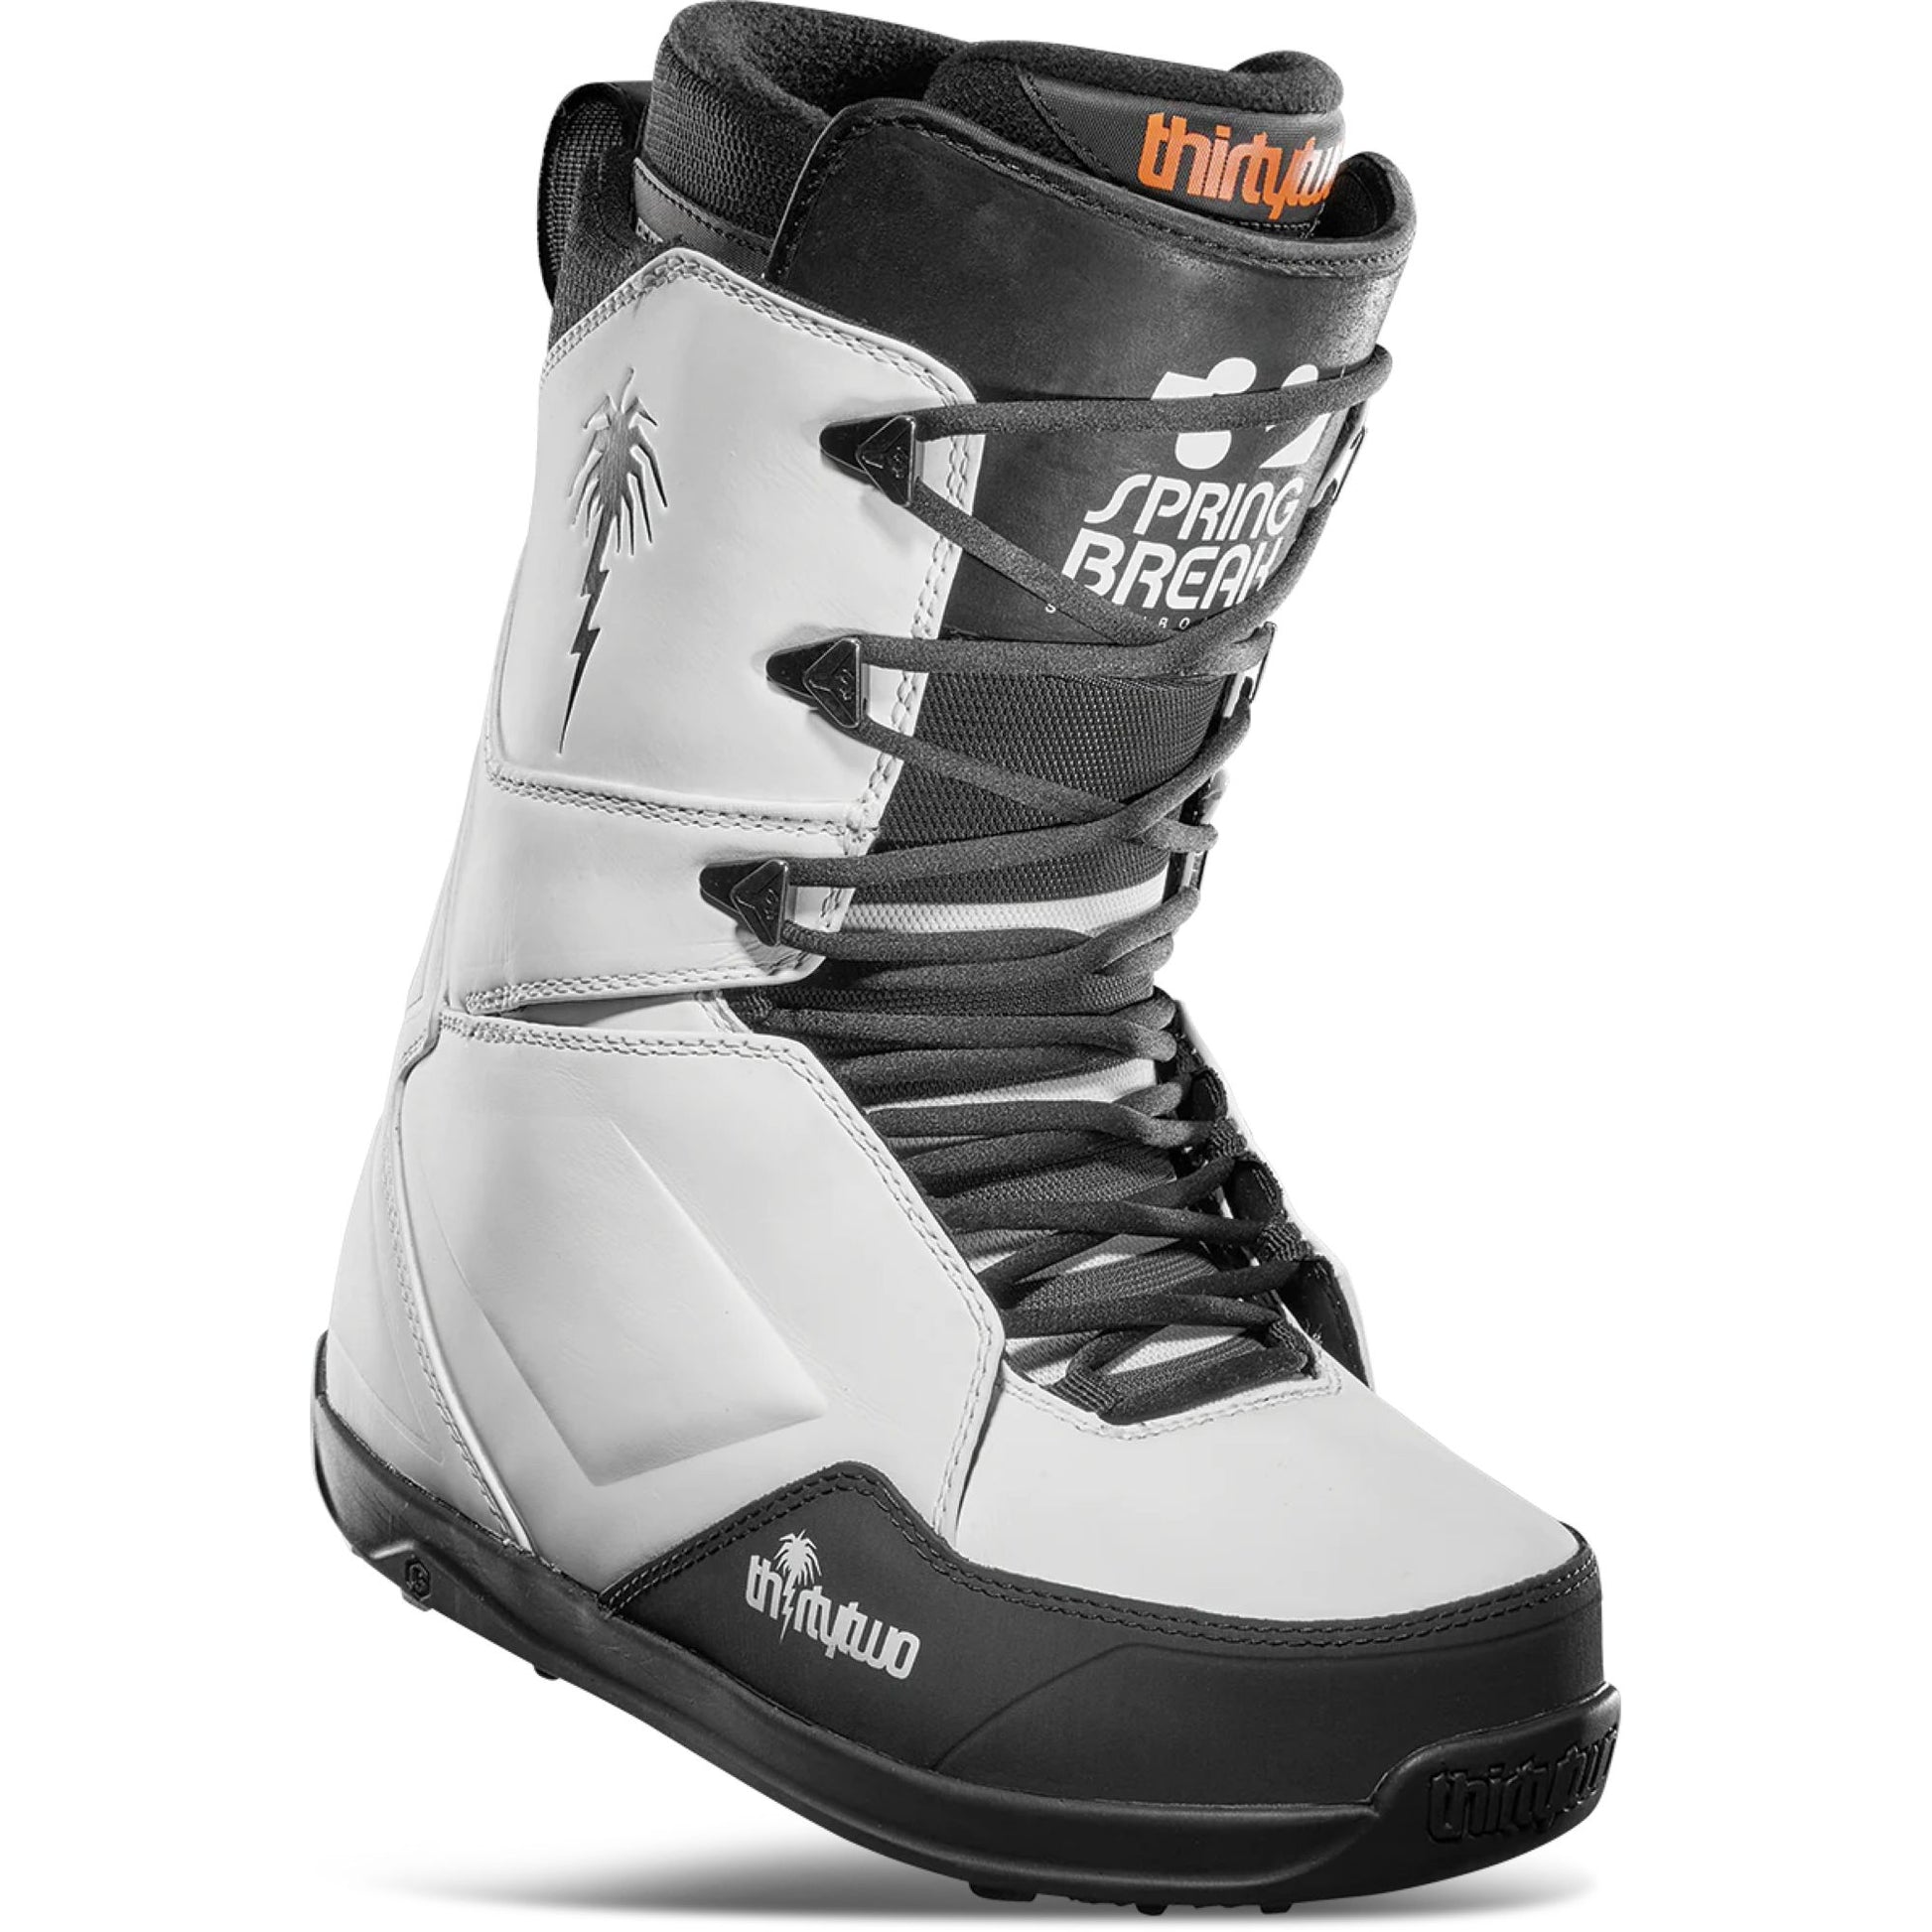 ThirtyTwo Lashed Premium Spring Break Snowboard Boots White Black 8 Snowboard Boots